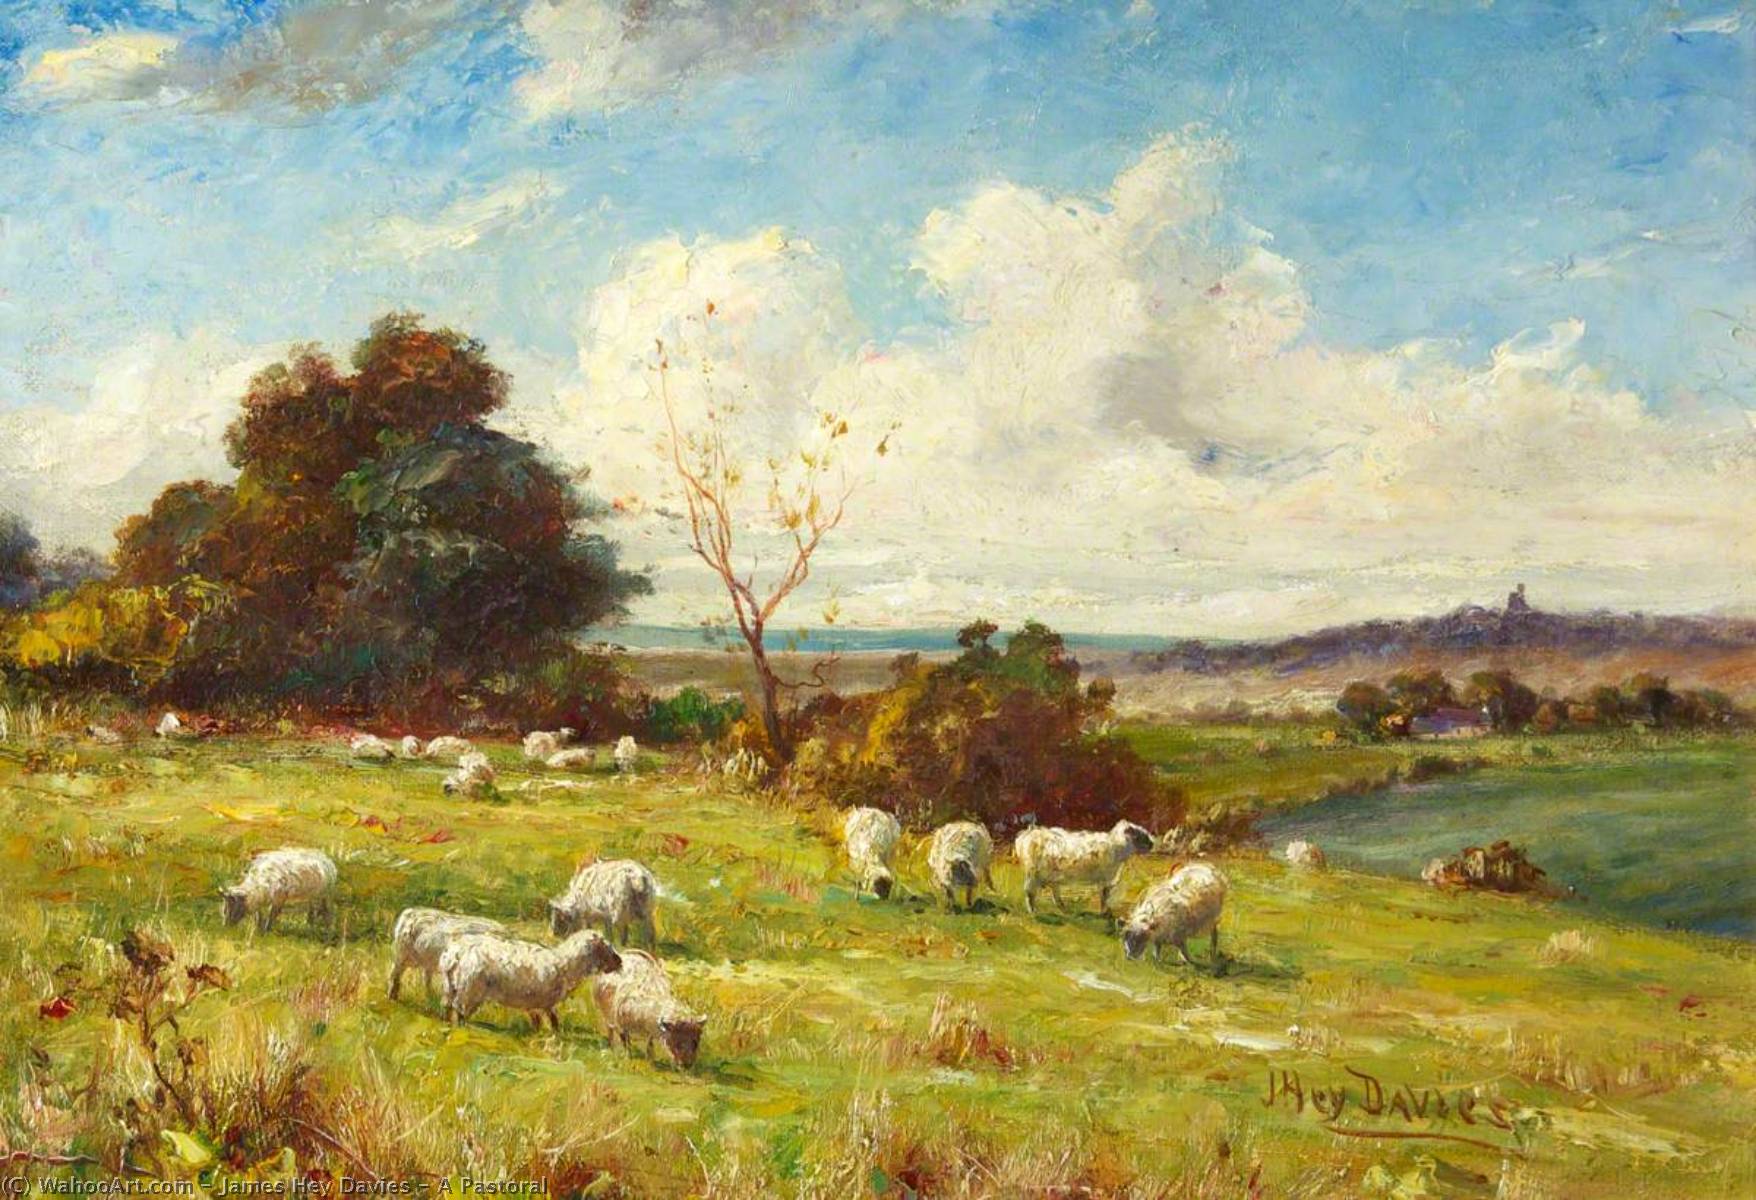 Buy Museum Art Reproductions A Pastoral, 1910 by James Hey Davies (1844-1926) | ArtsDot.com